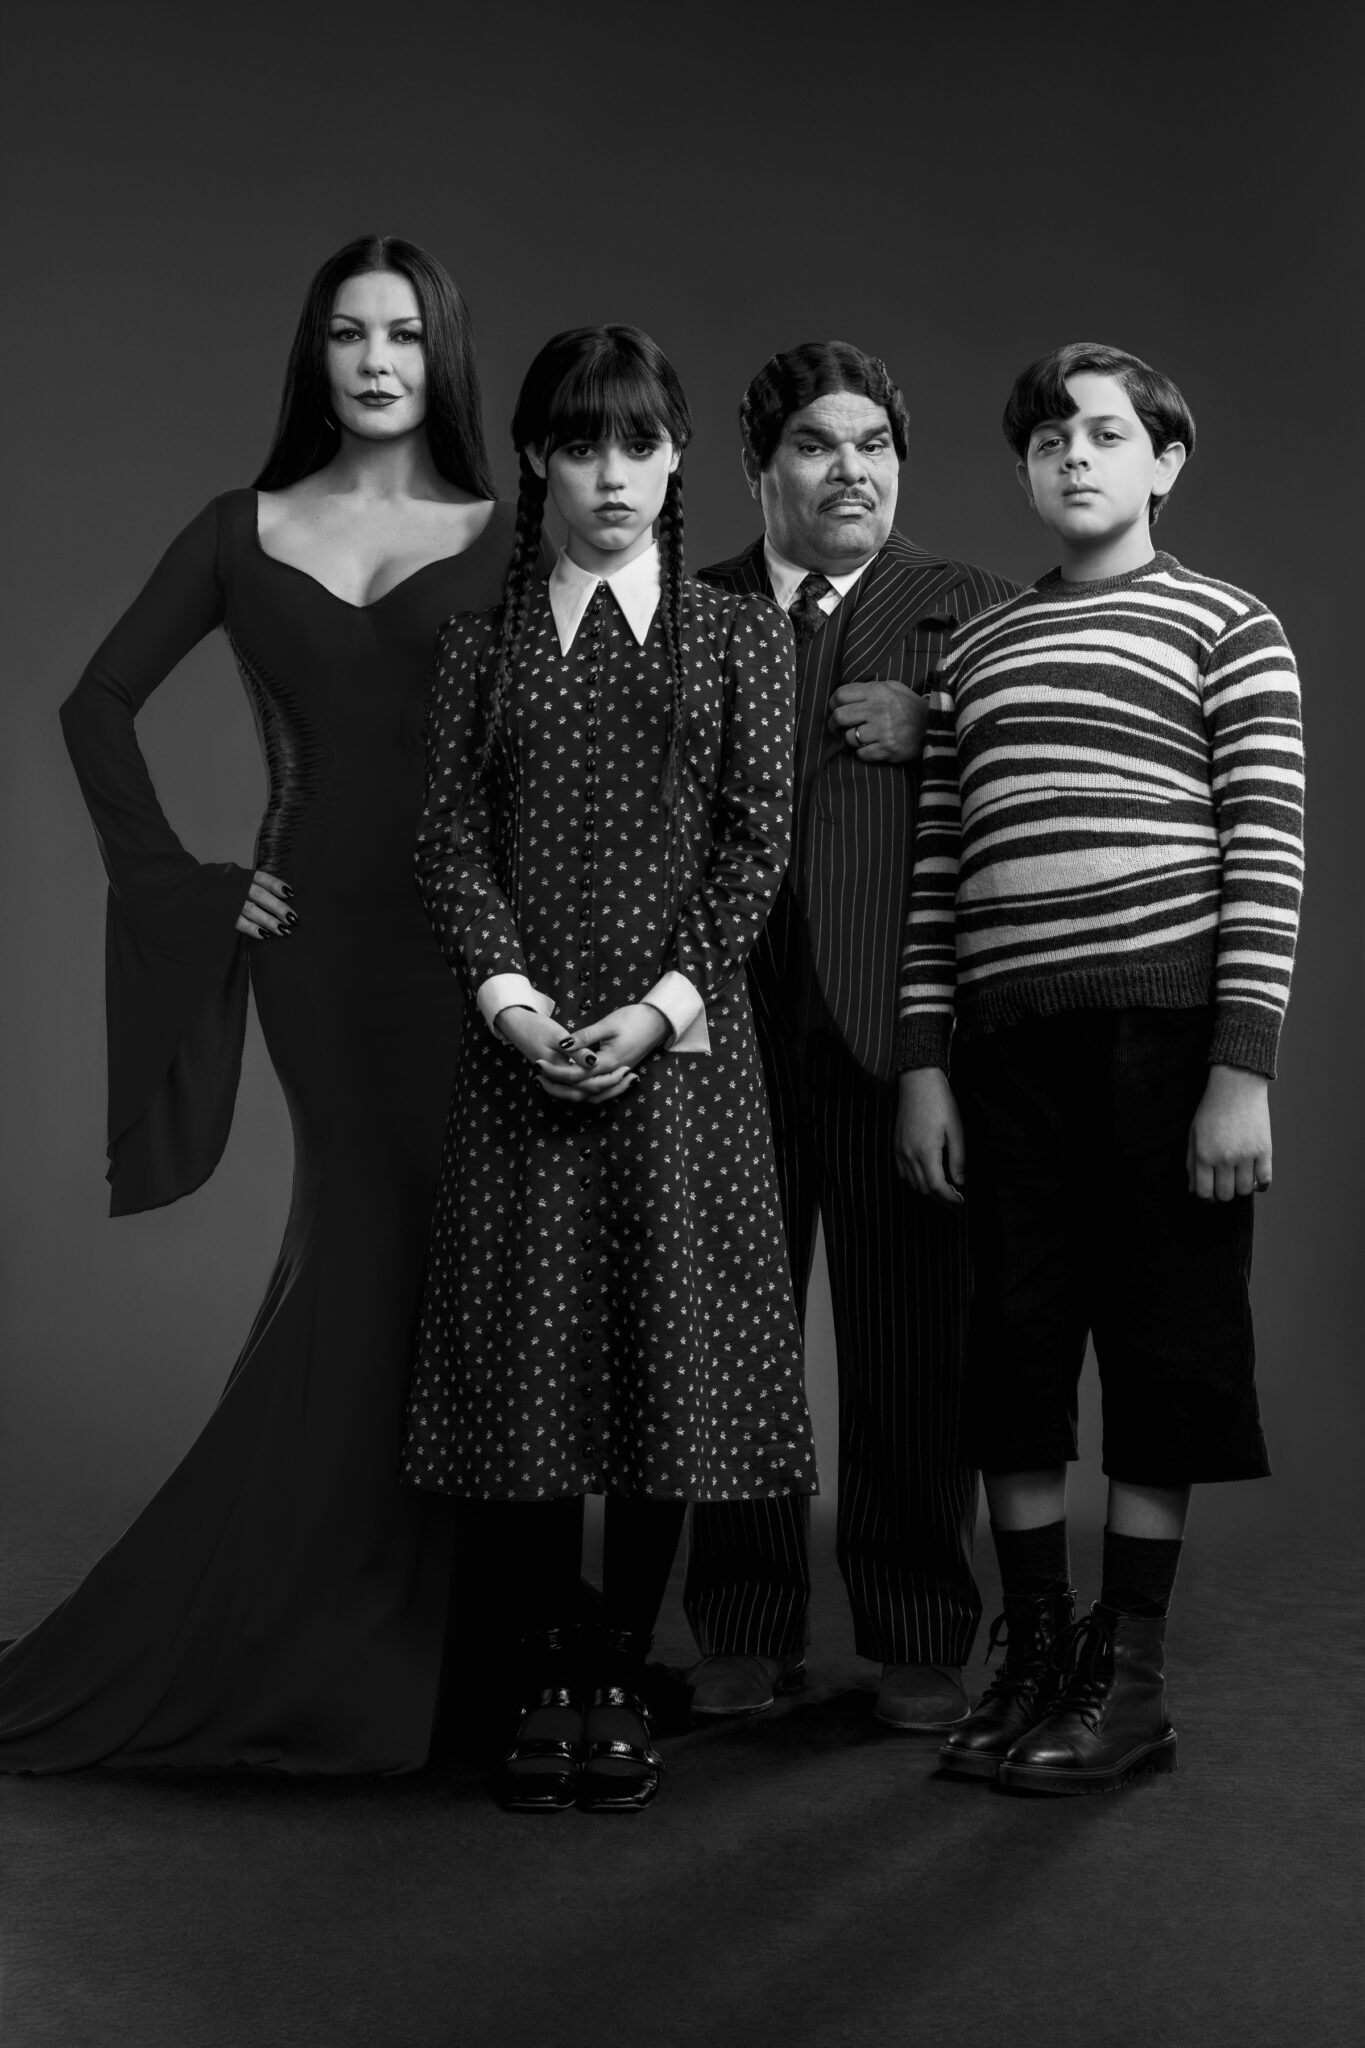 Catherine Zeta-Jones als Morticia Adams, Jenna Ortega als Wednesday Addams, Luis Guzman als Gomez Addams und Issac Ordonez als Pugsley Addams in schwarzweiß